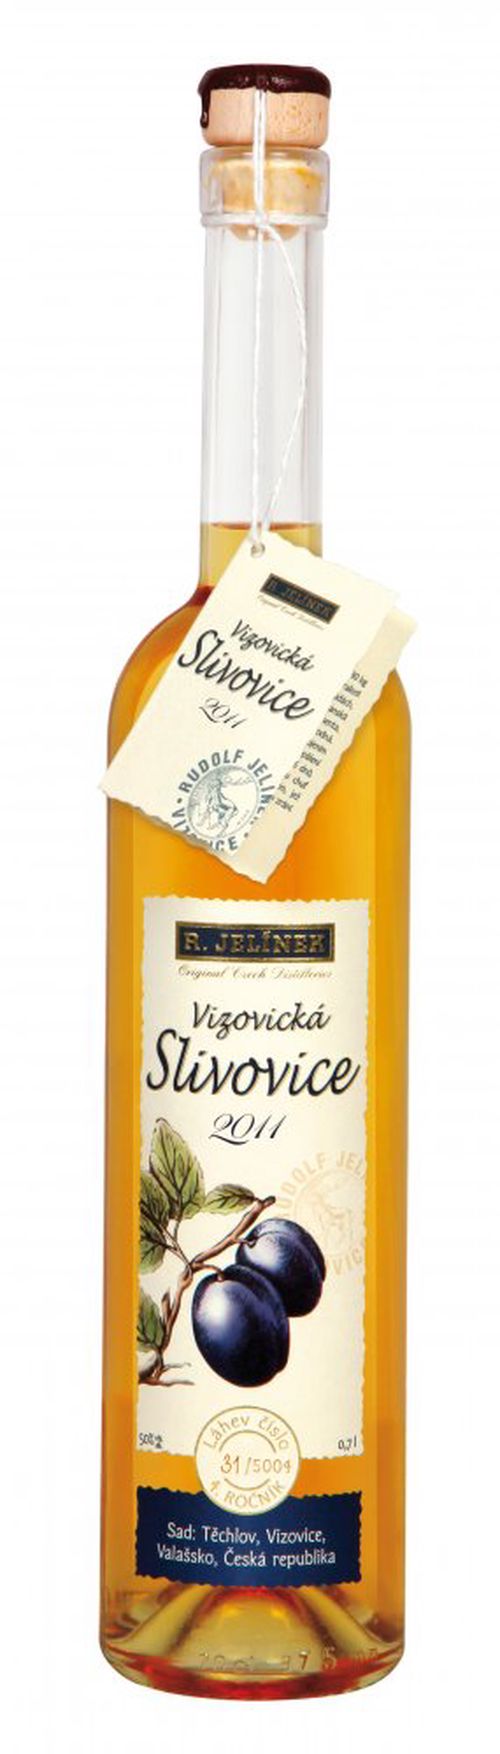 Vizovická Slivovice 2010 0,7l 50%